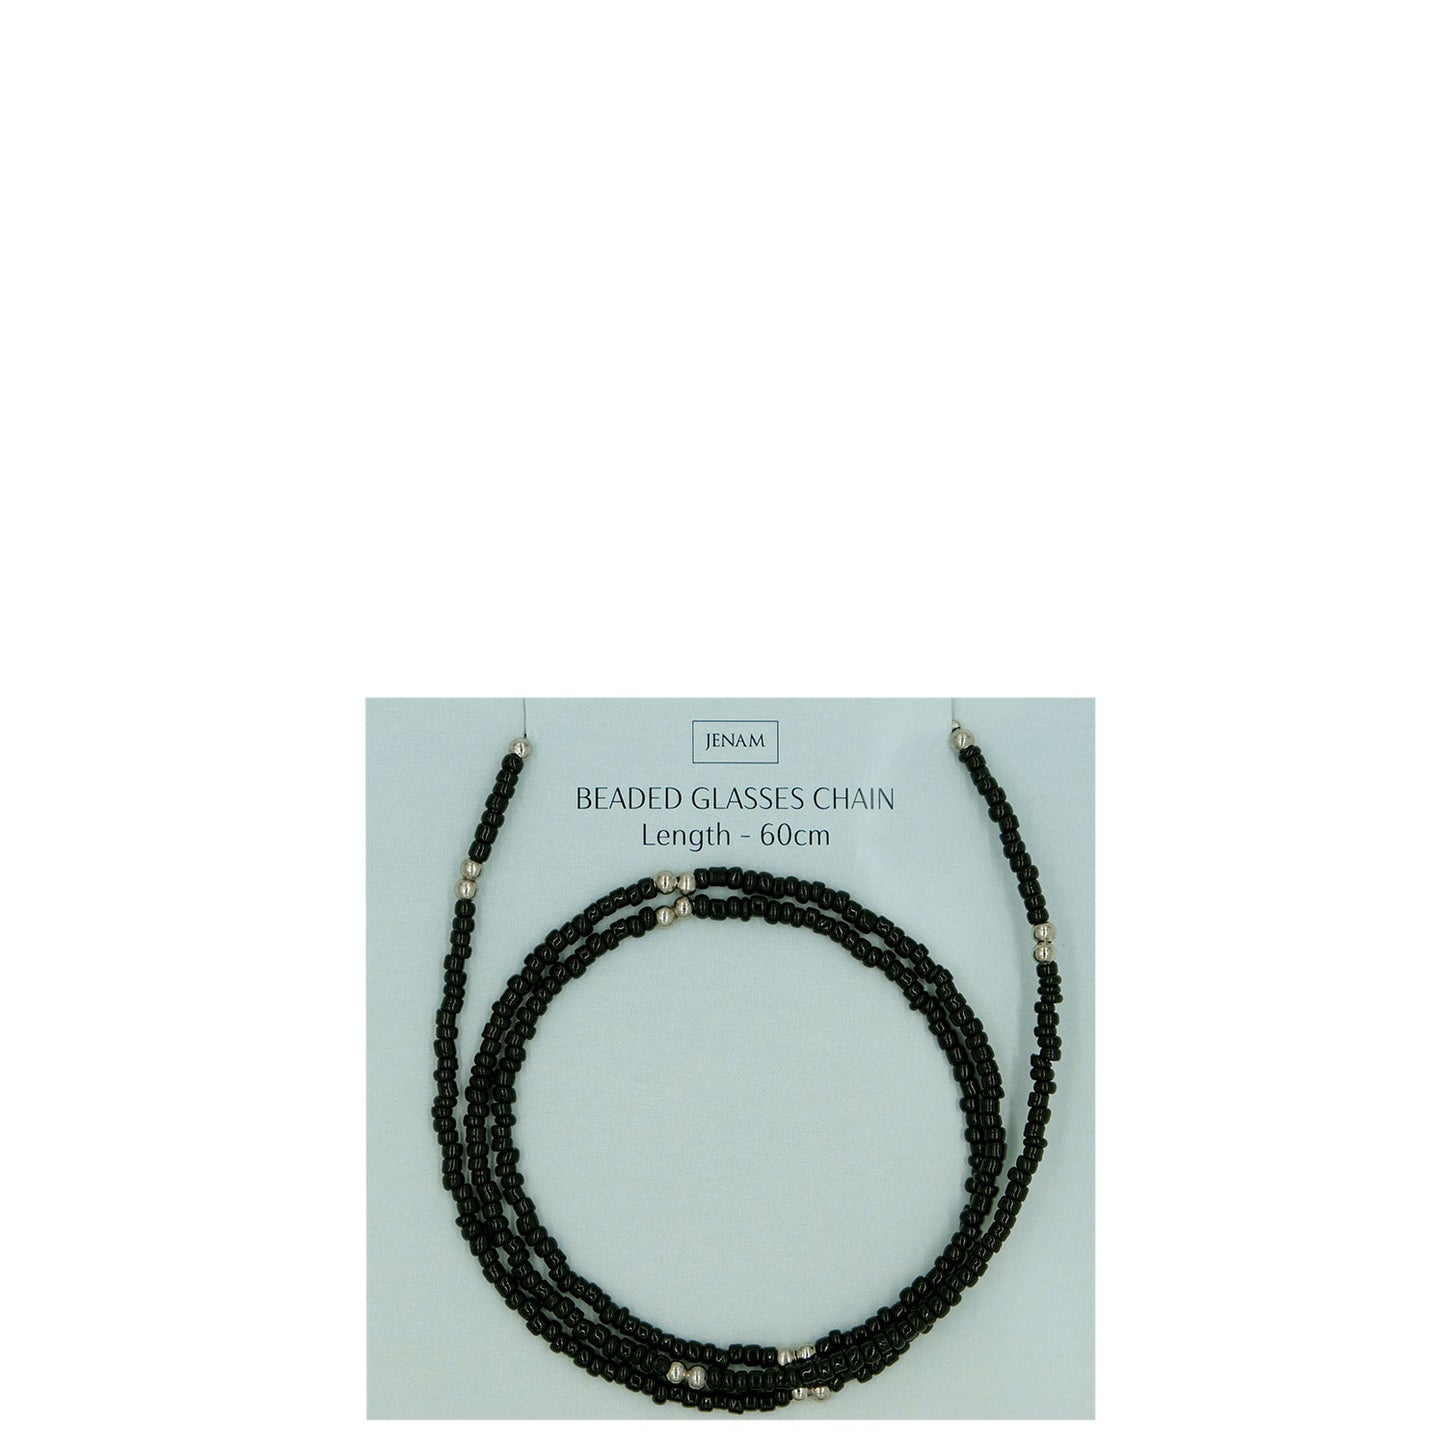 Beaded Glasses Chain (Black & Silver) - 60cm